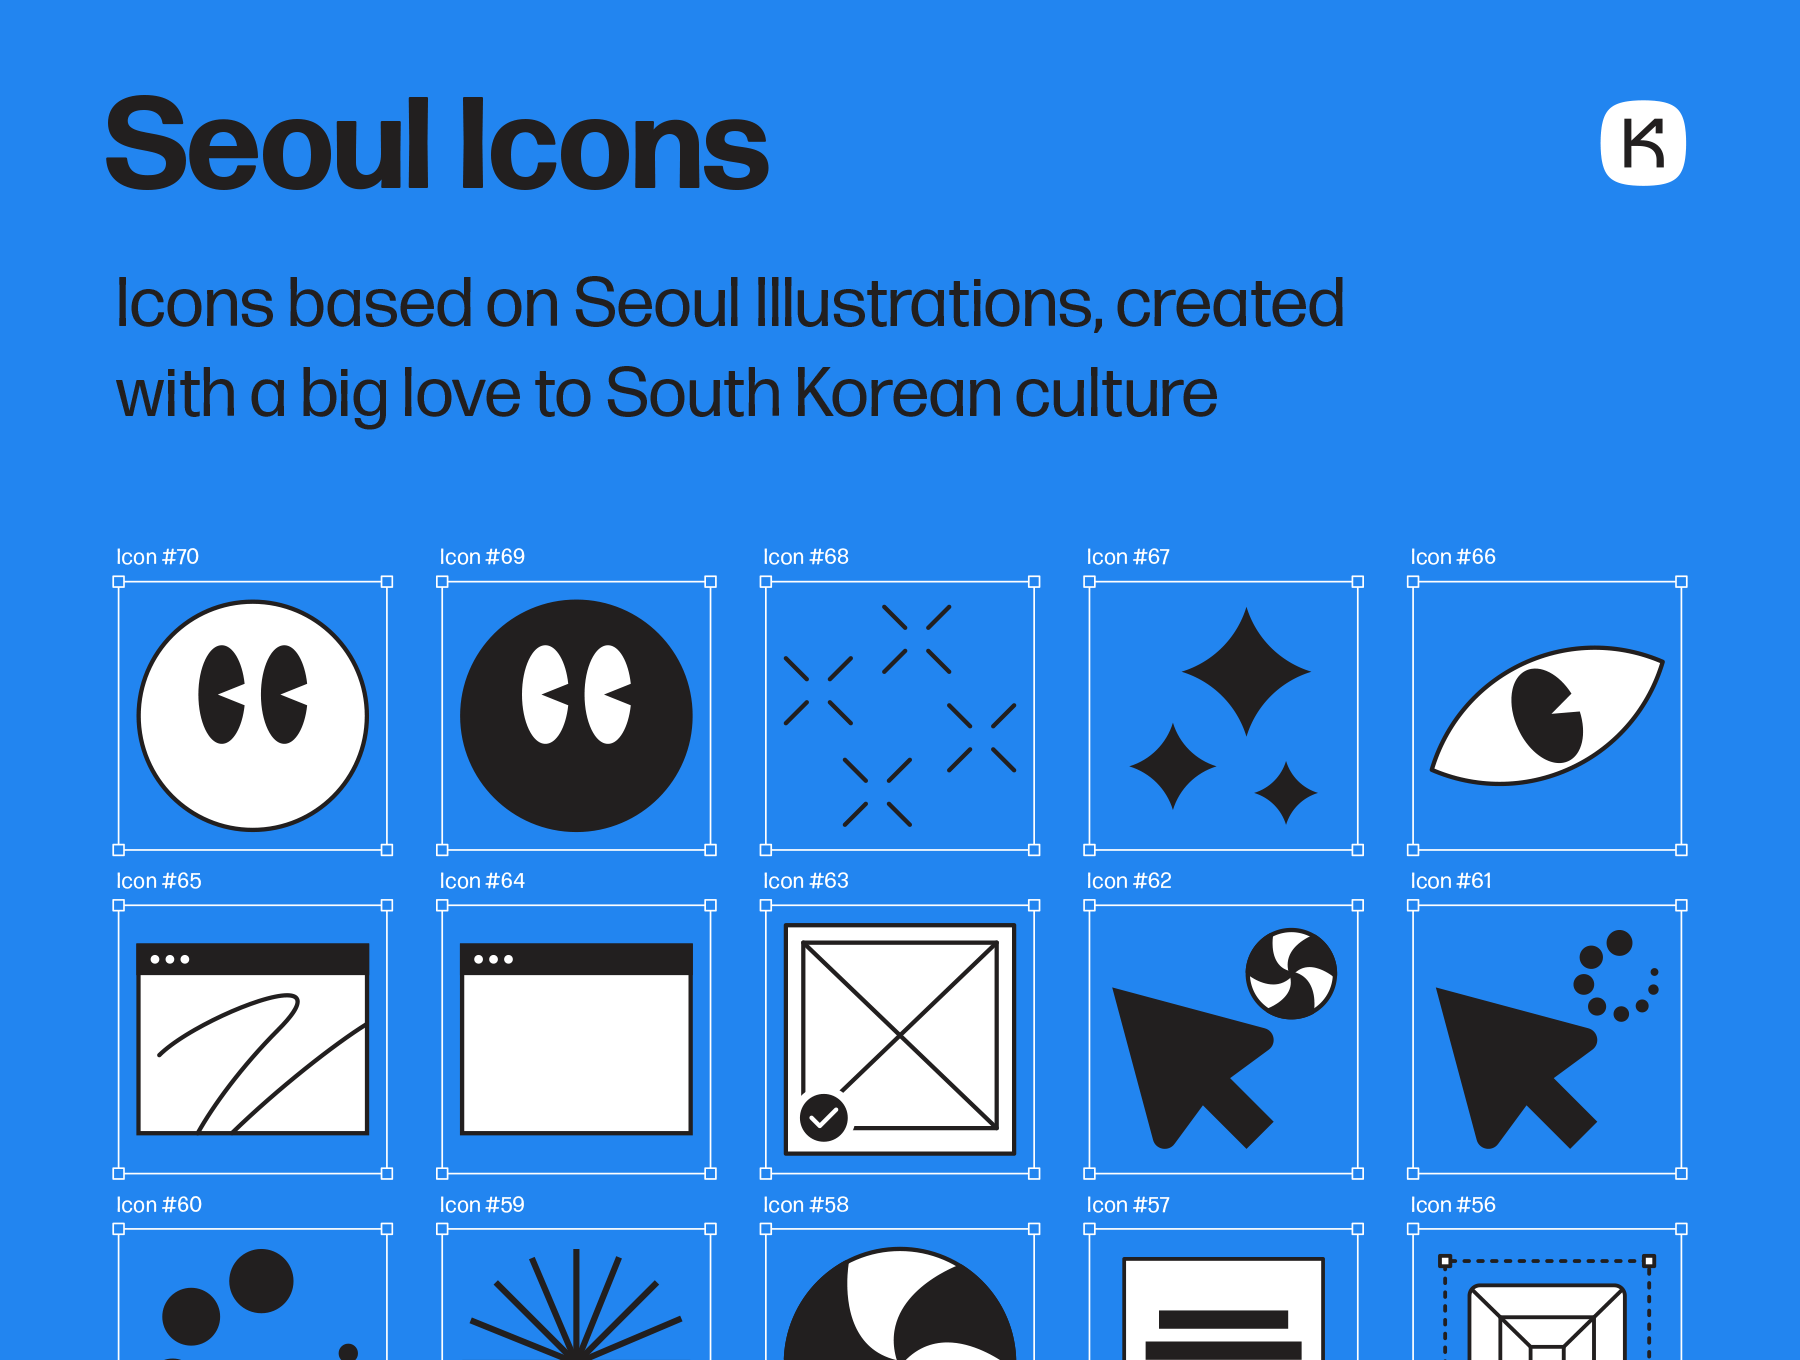 首尔轮廓图标 Seoul Icons sketch, psd, ai, After Effects, powerpoint, xd, figma格式-3D/图标-到位啦UI